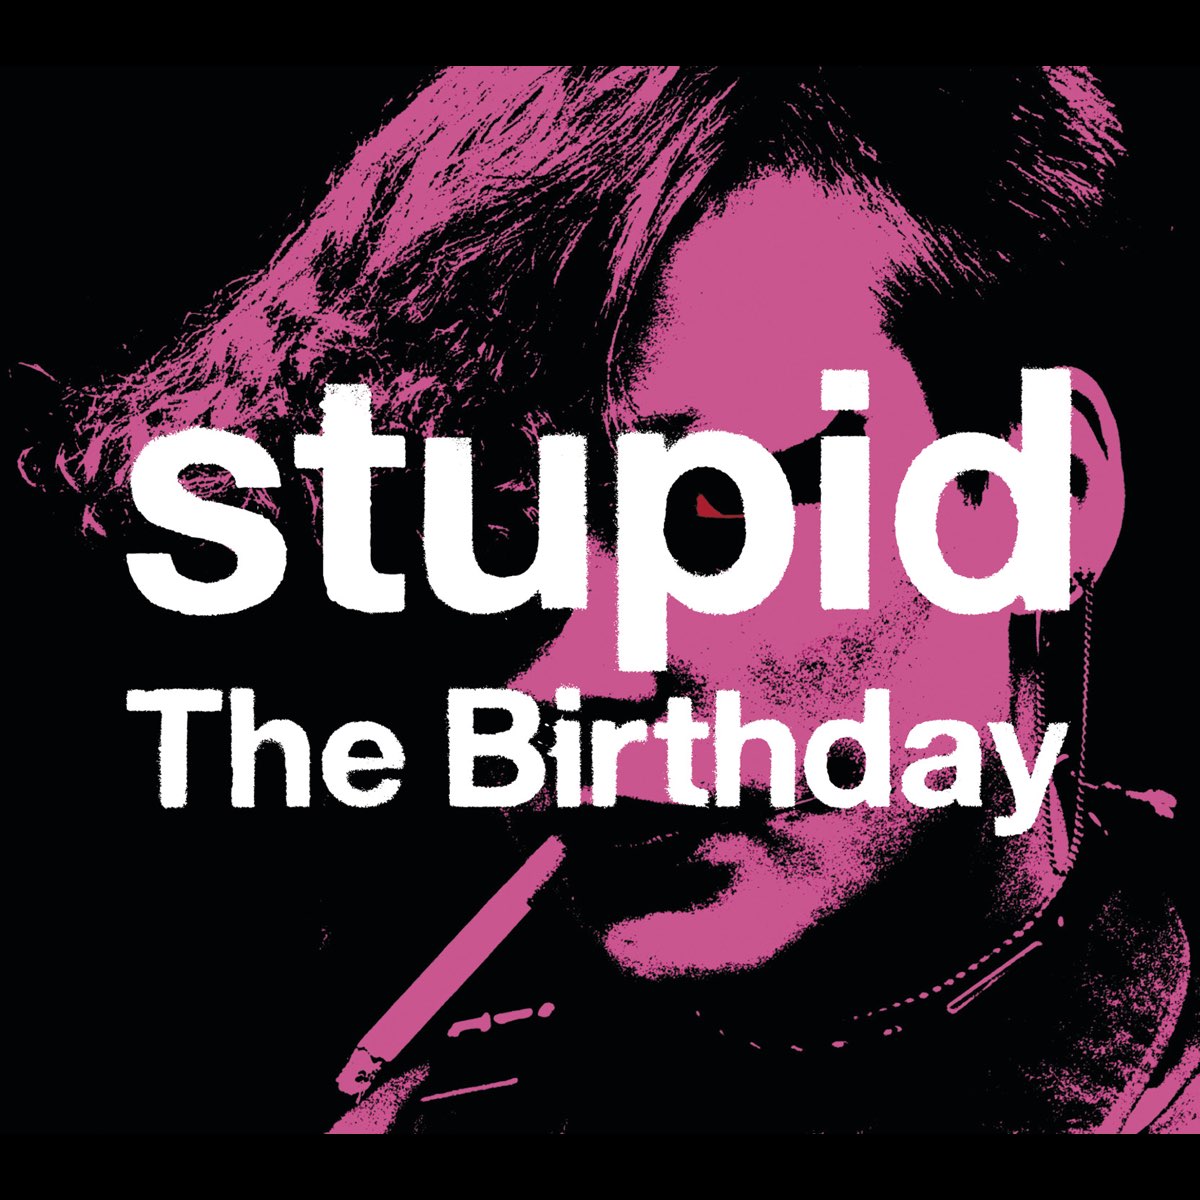 It is my birthday my stupid birthday. Stupid трек. My stupid Birthday. My stupid Birthday песня. Stupid песня.